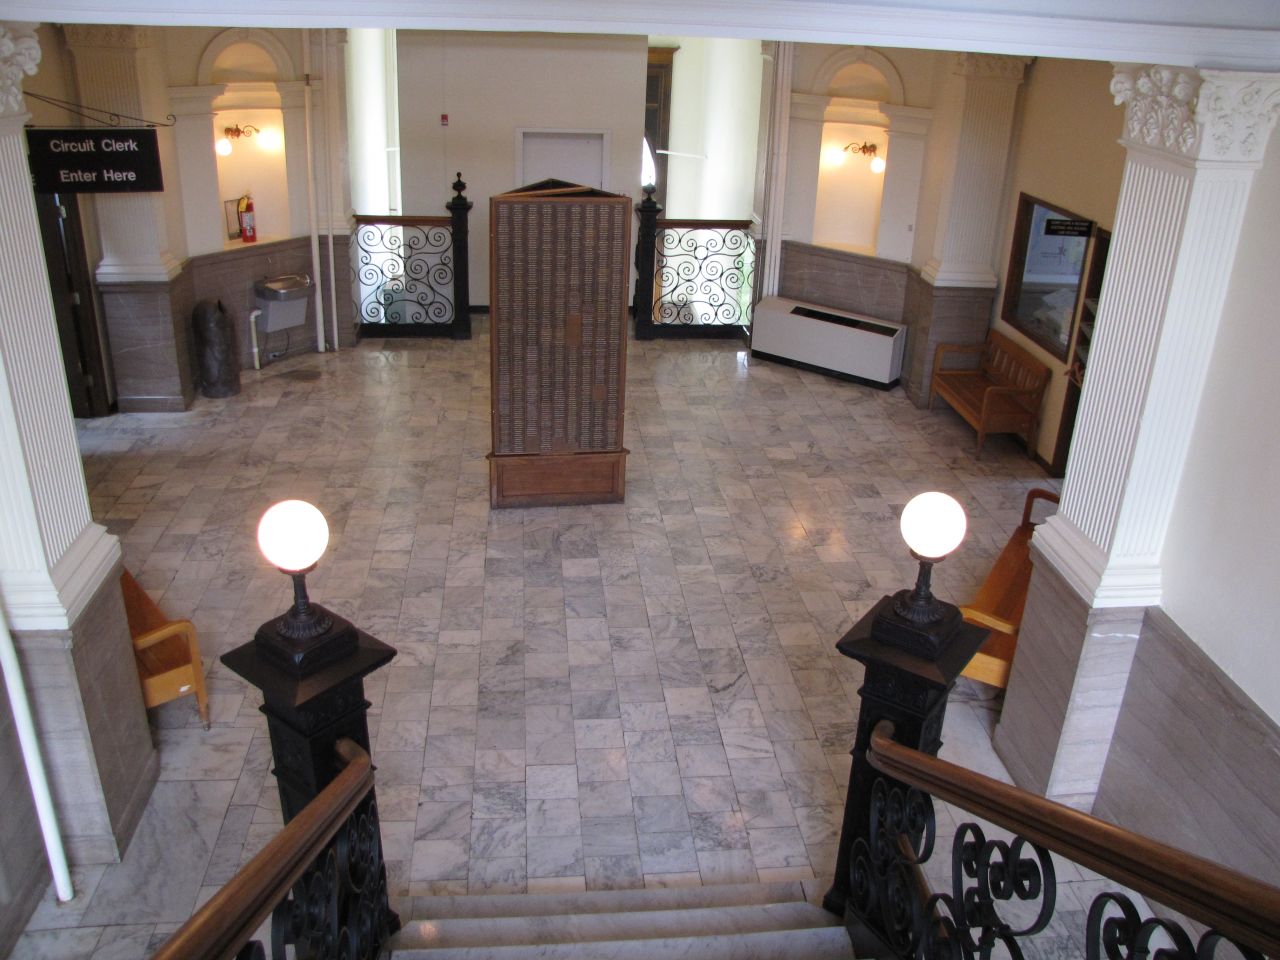 Second floor lobby